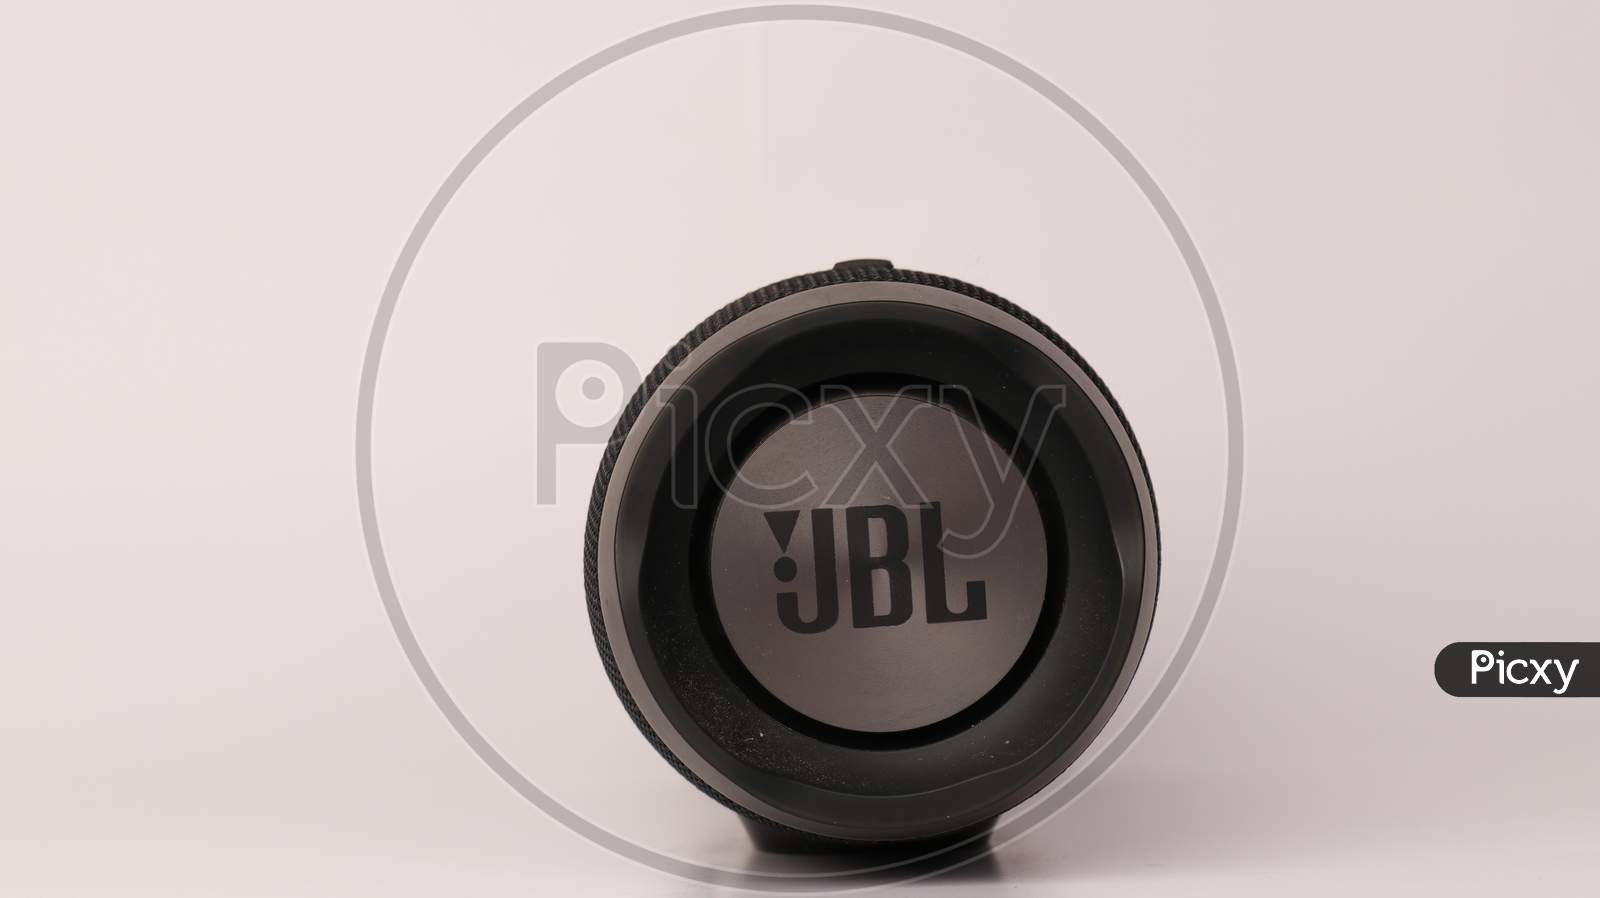 JBL logo on a side radiator for the bluetooth speaker